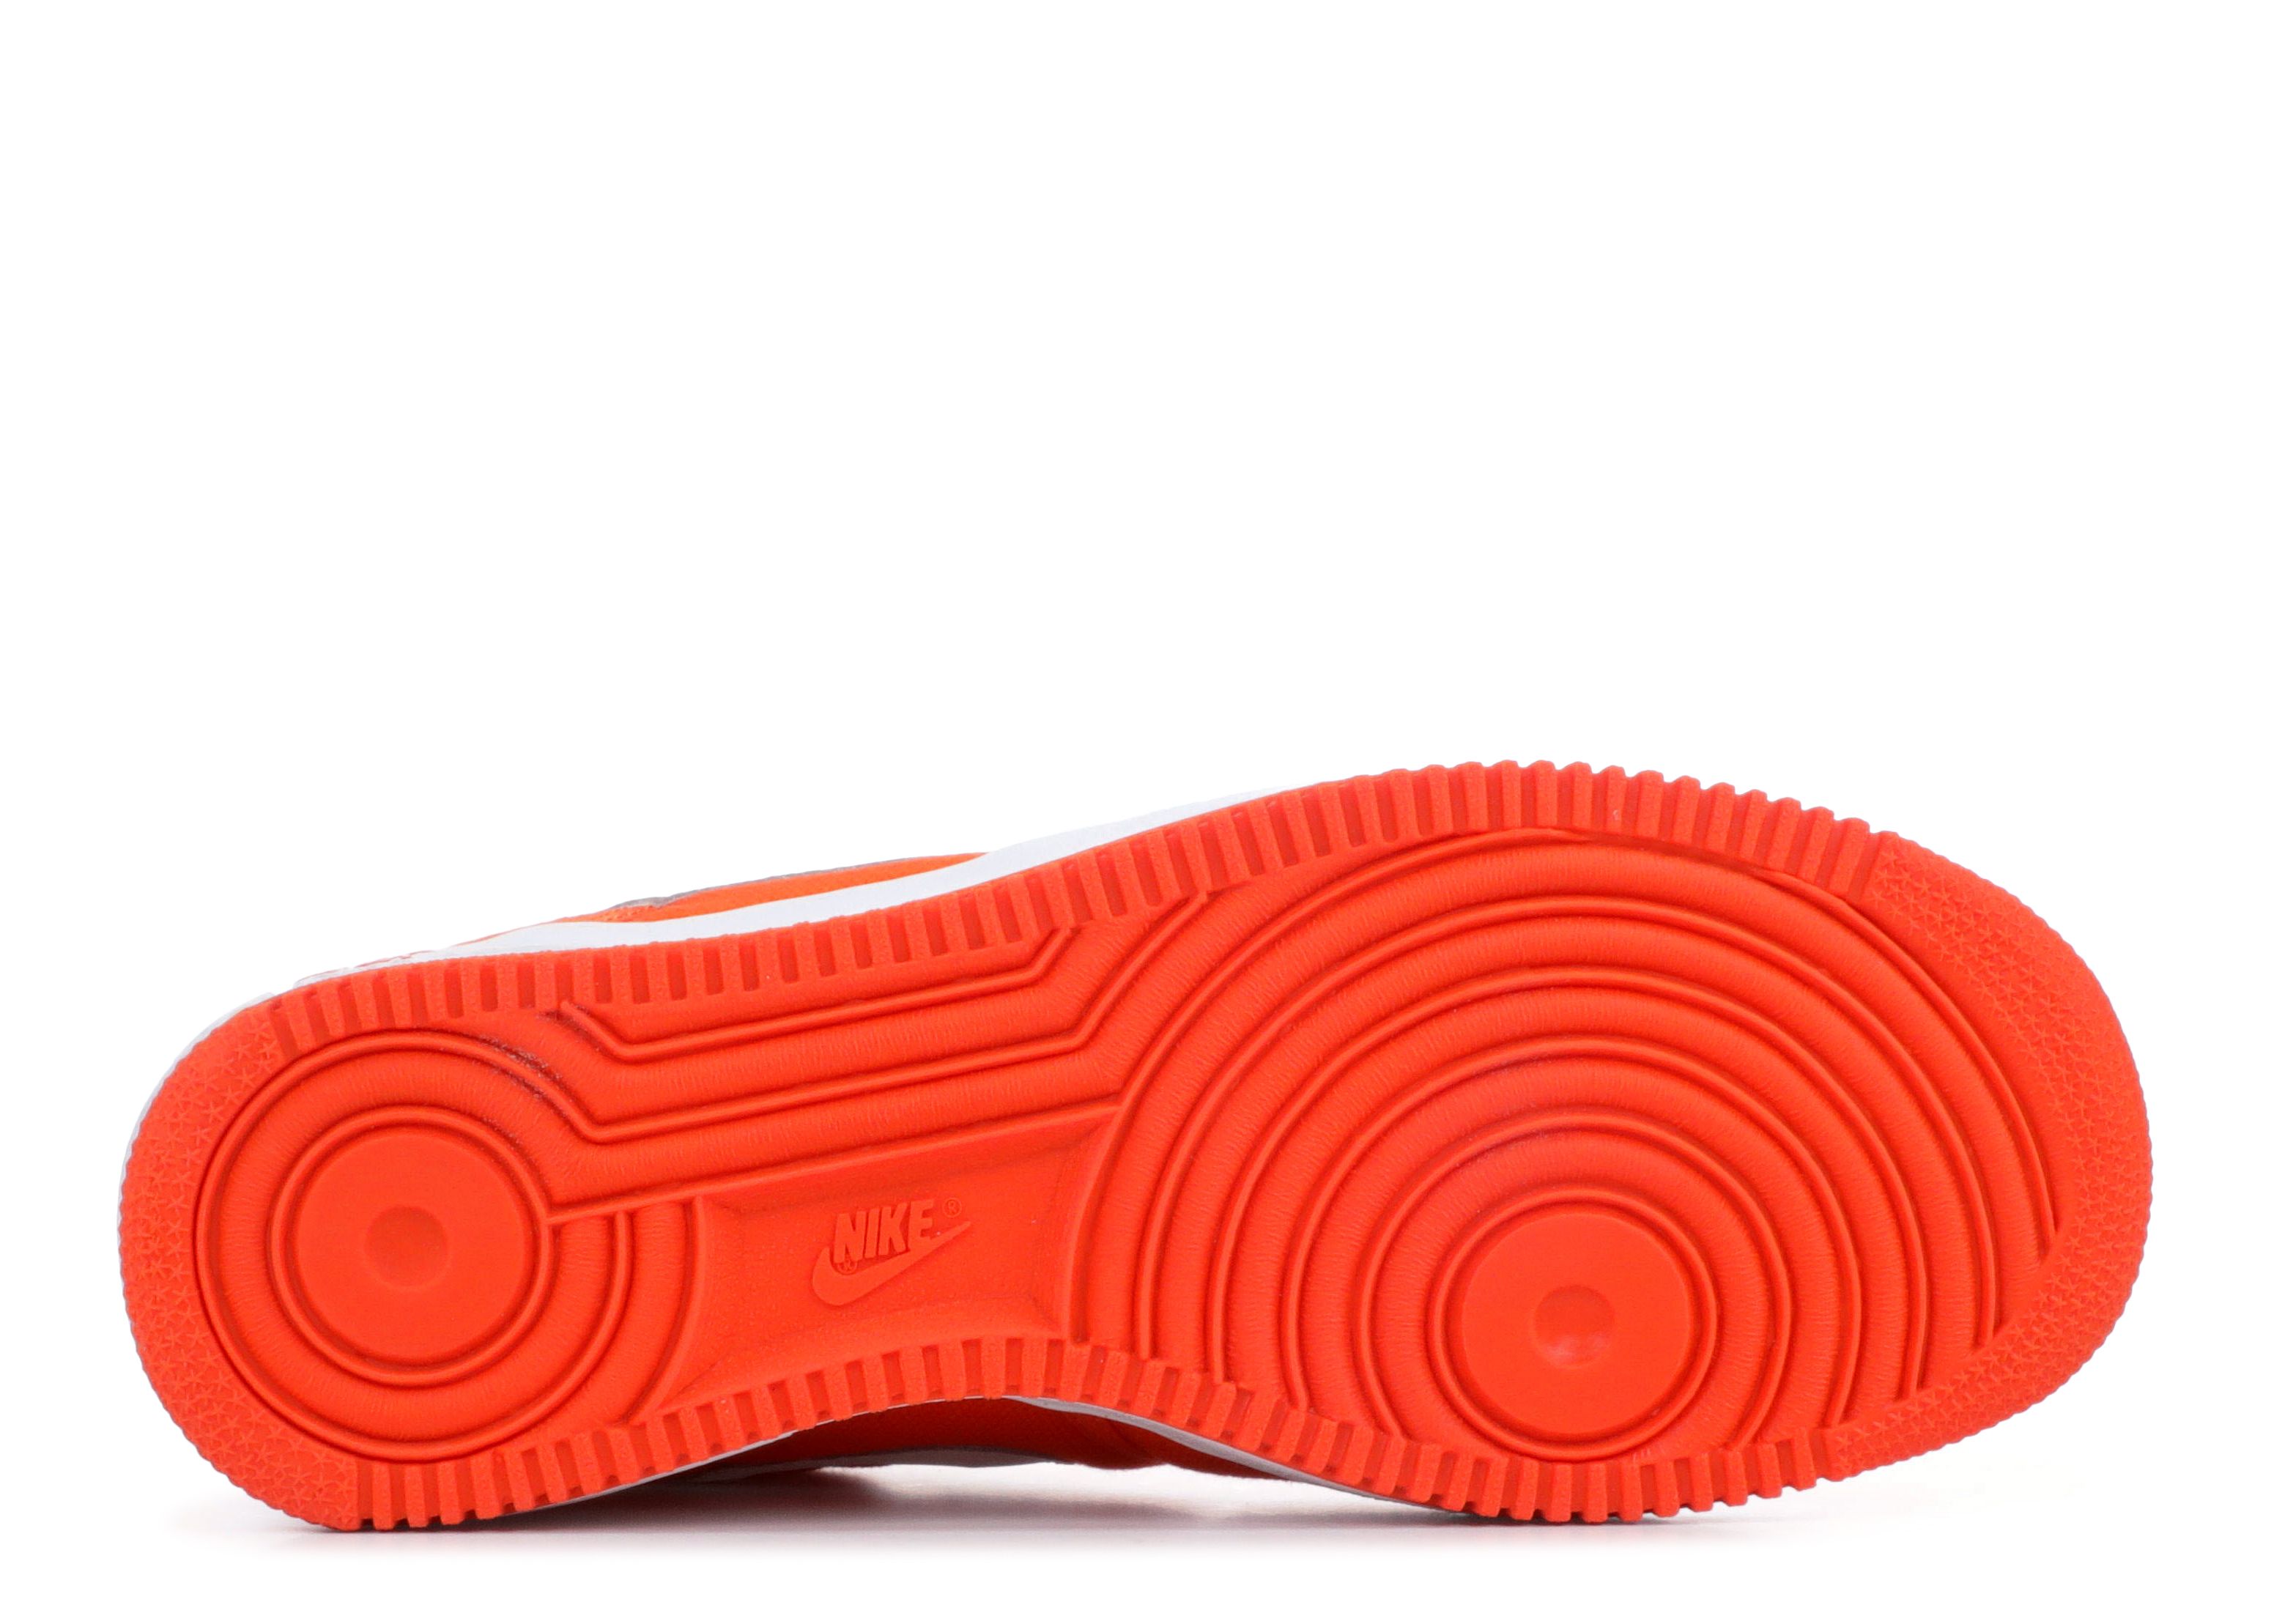 Air Force 1 Canvas - Nike - 624020 811 - safety orange/white